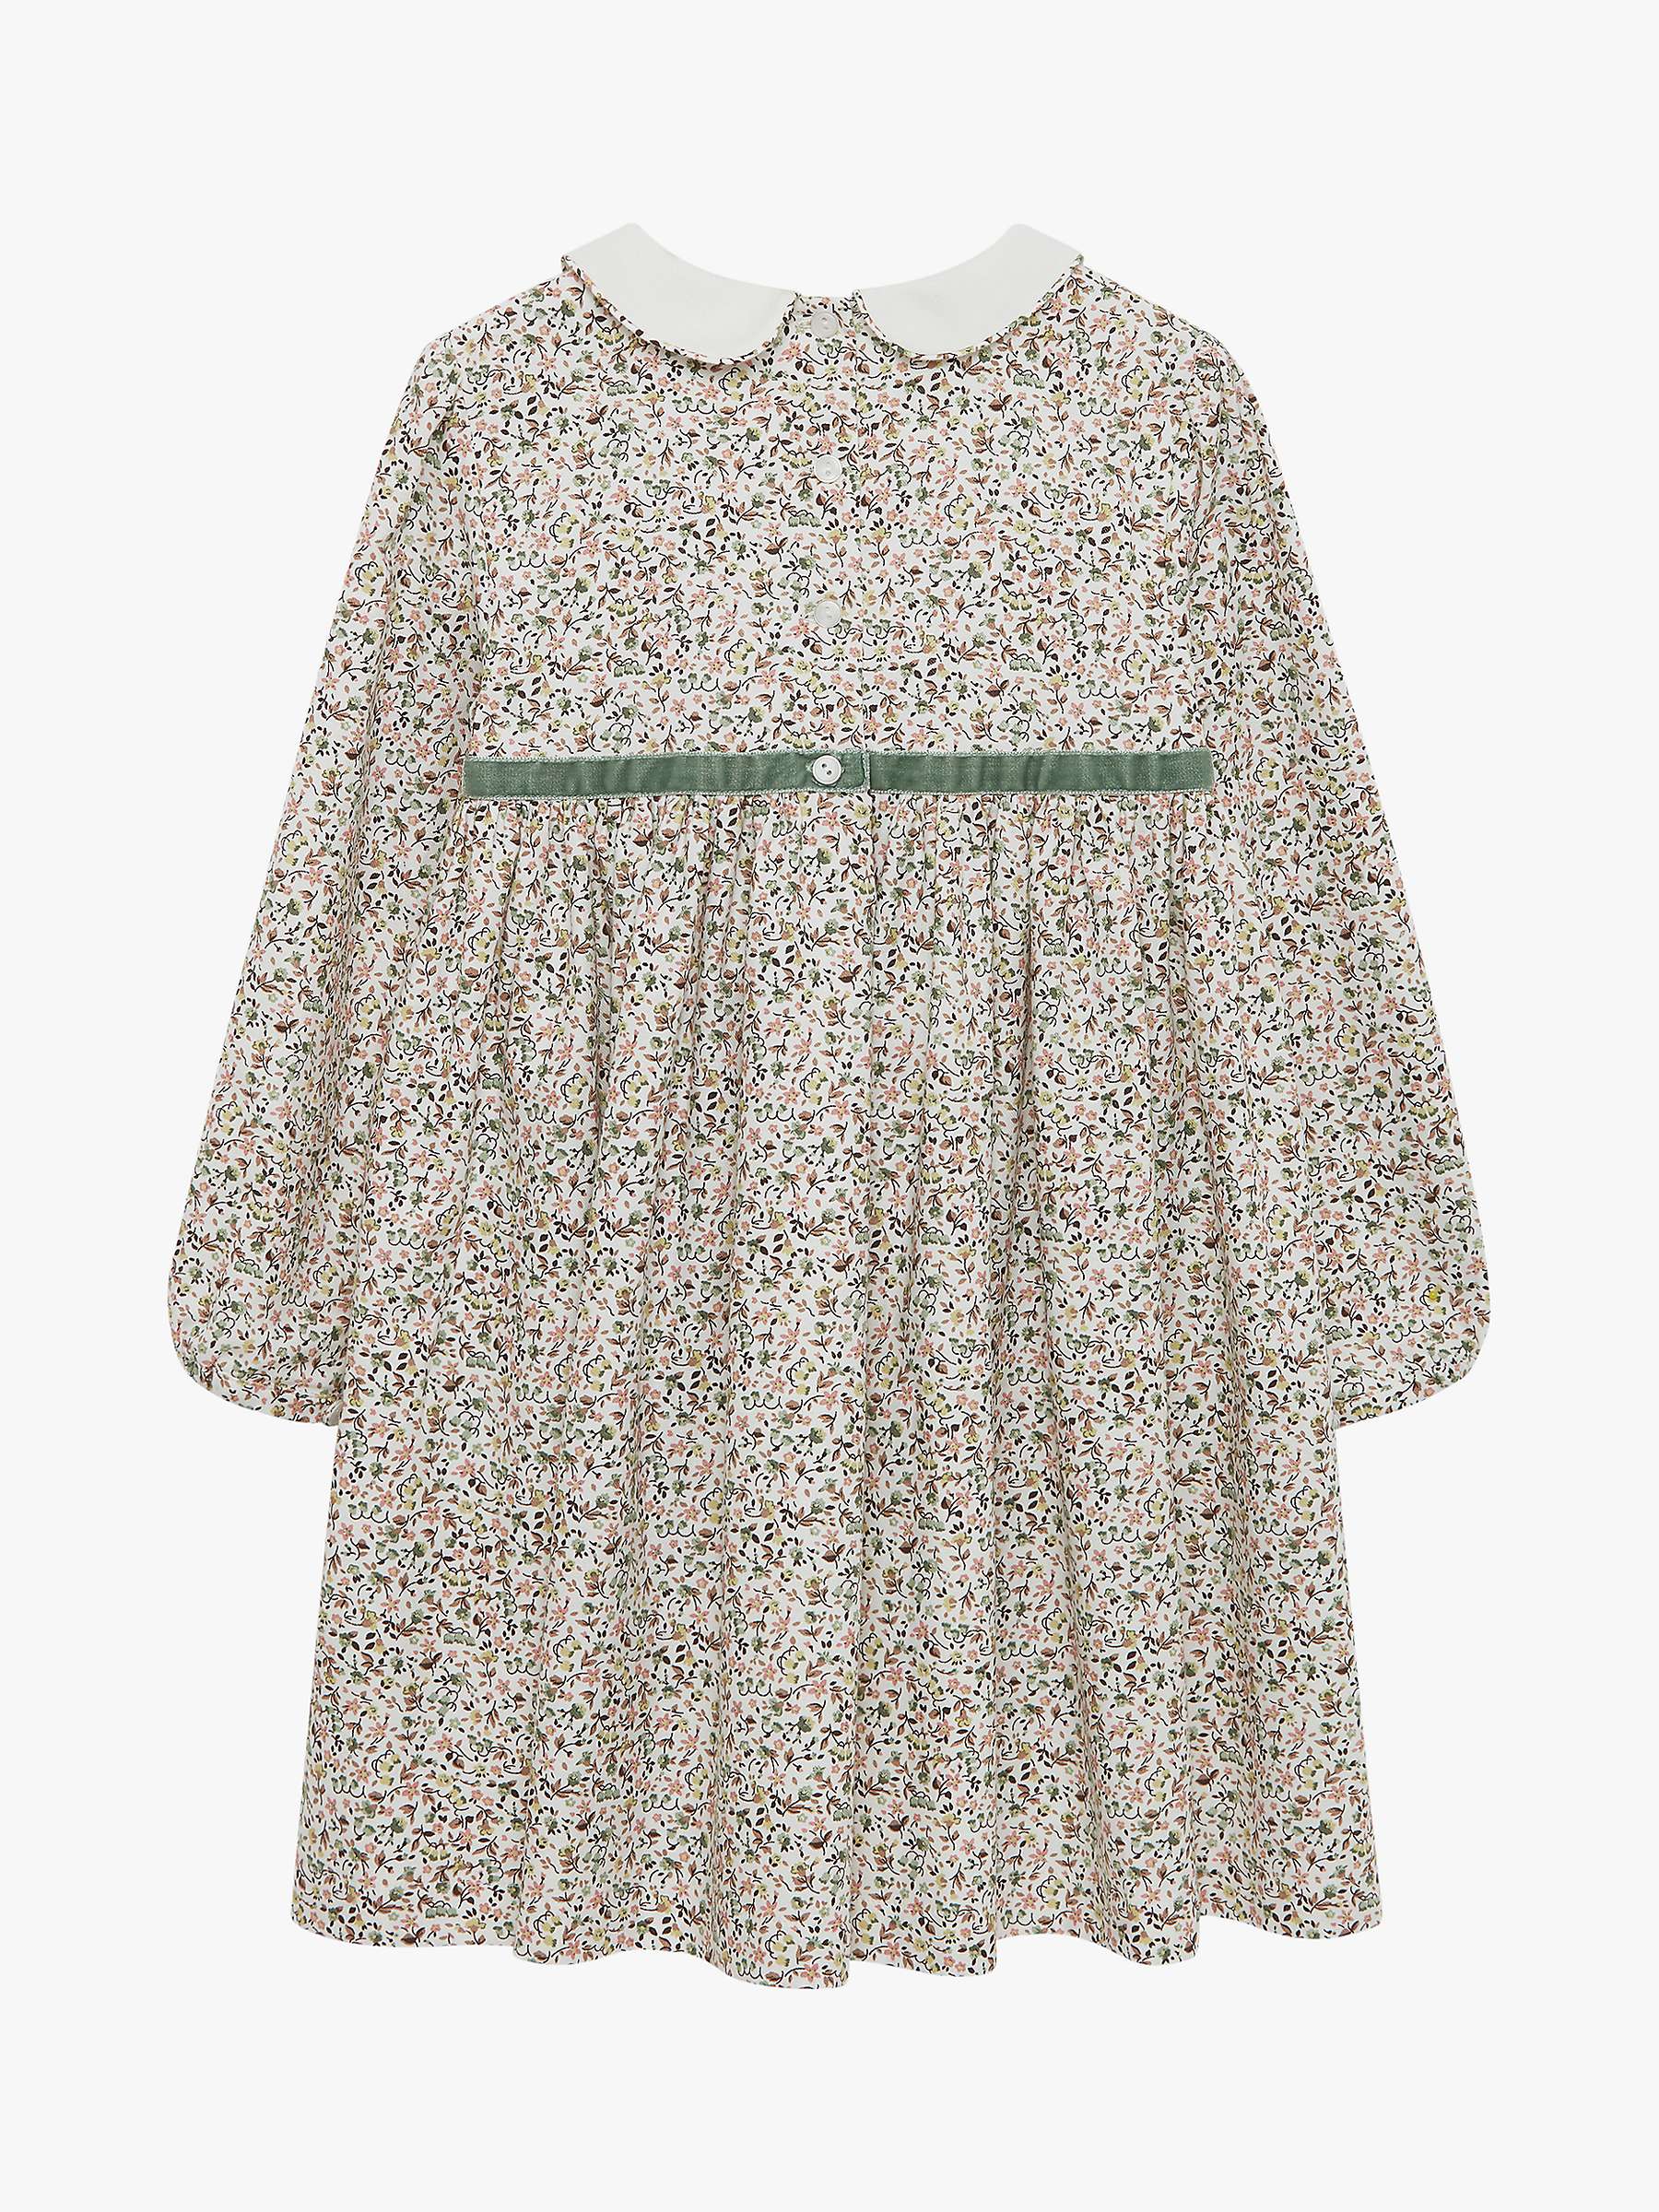 Buy Trotters Confiture Kids' Aubrey Bow Floral Dress, Green/Multi Online at johnlewis.com